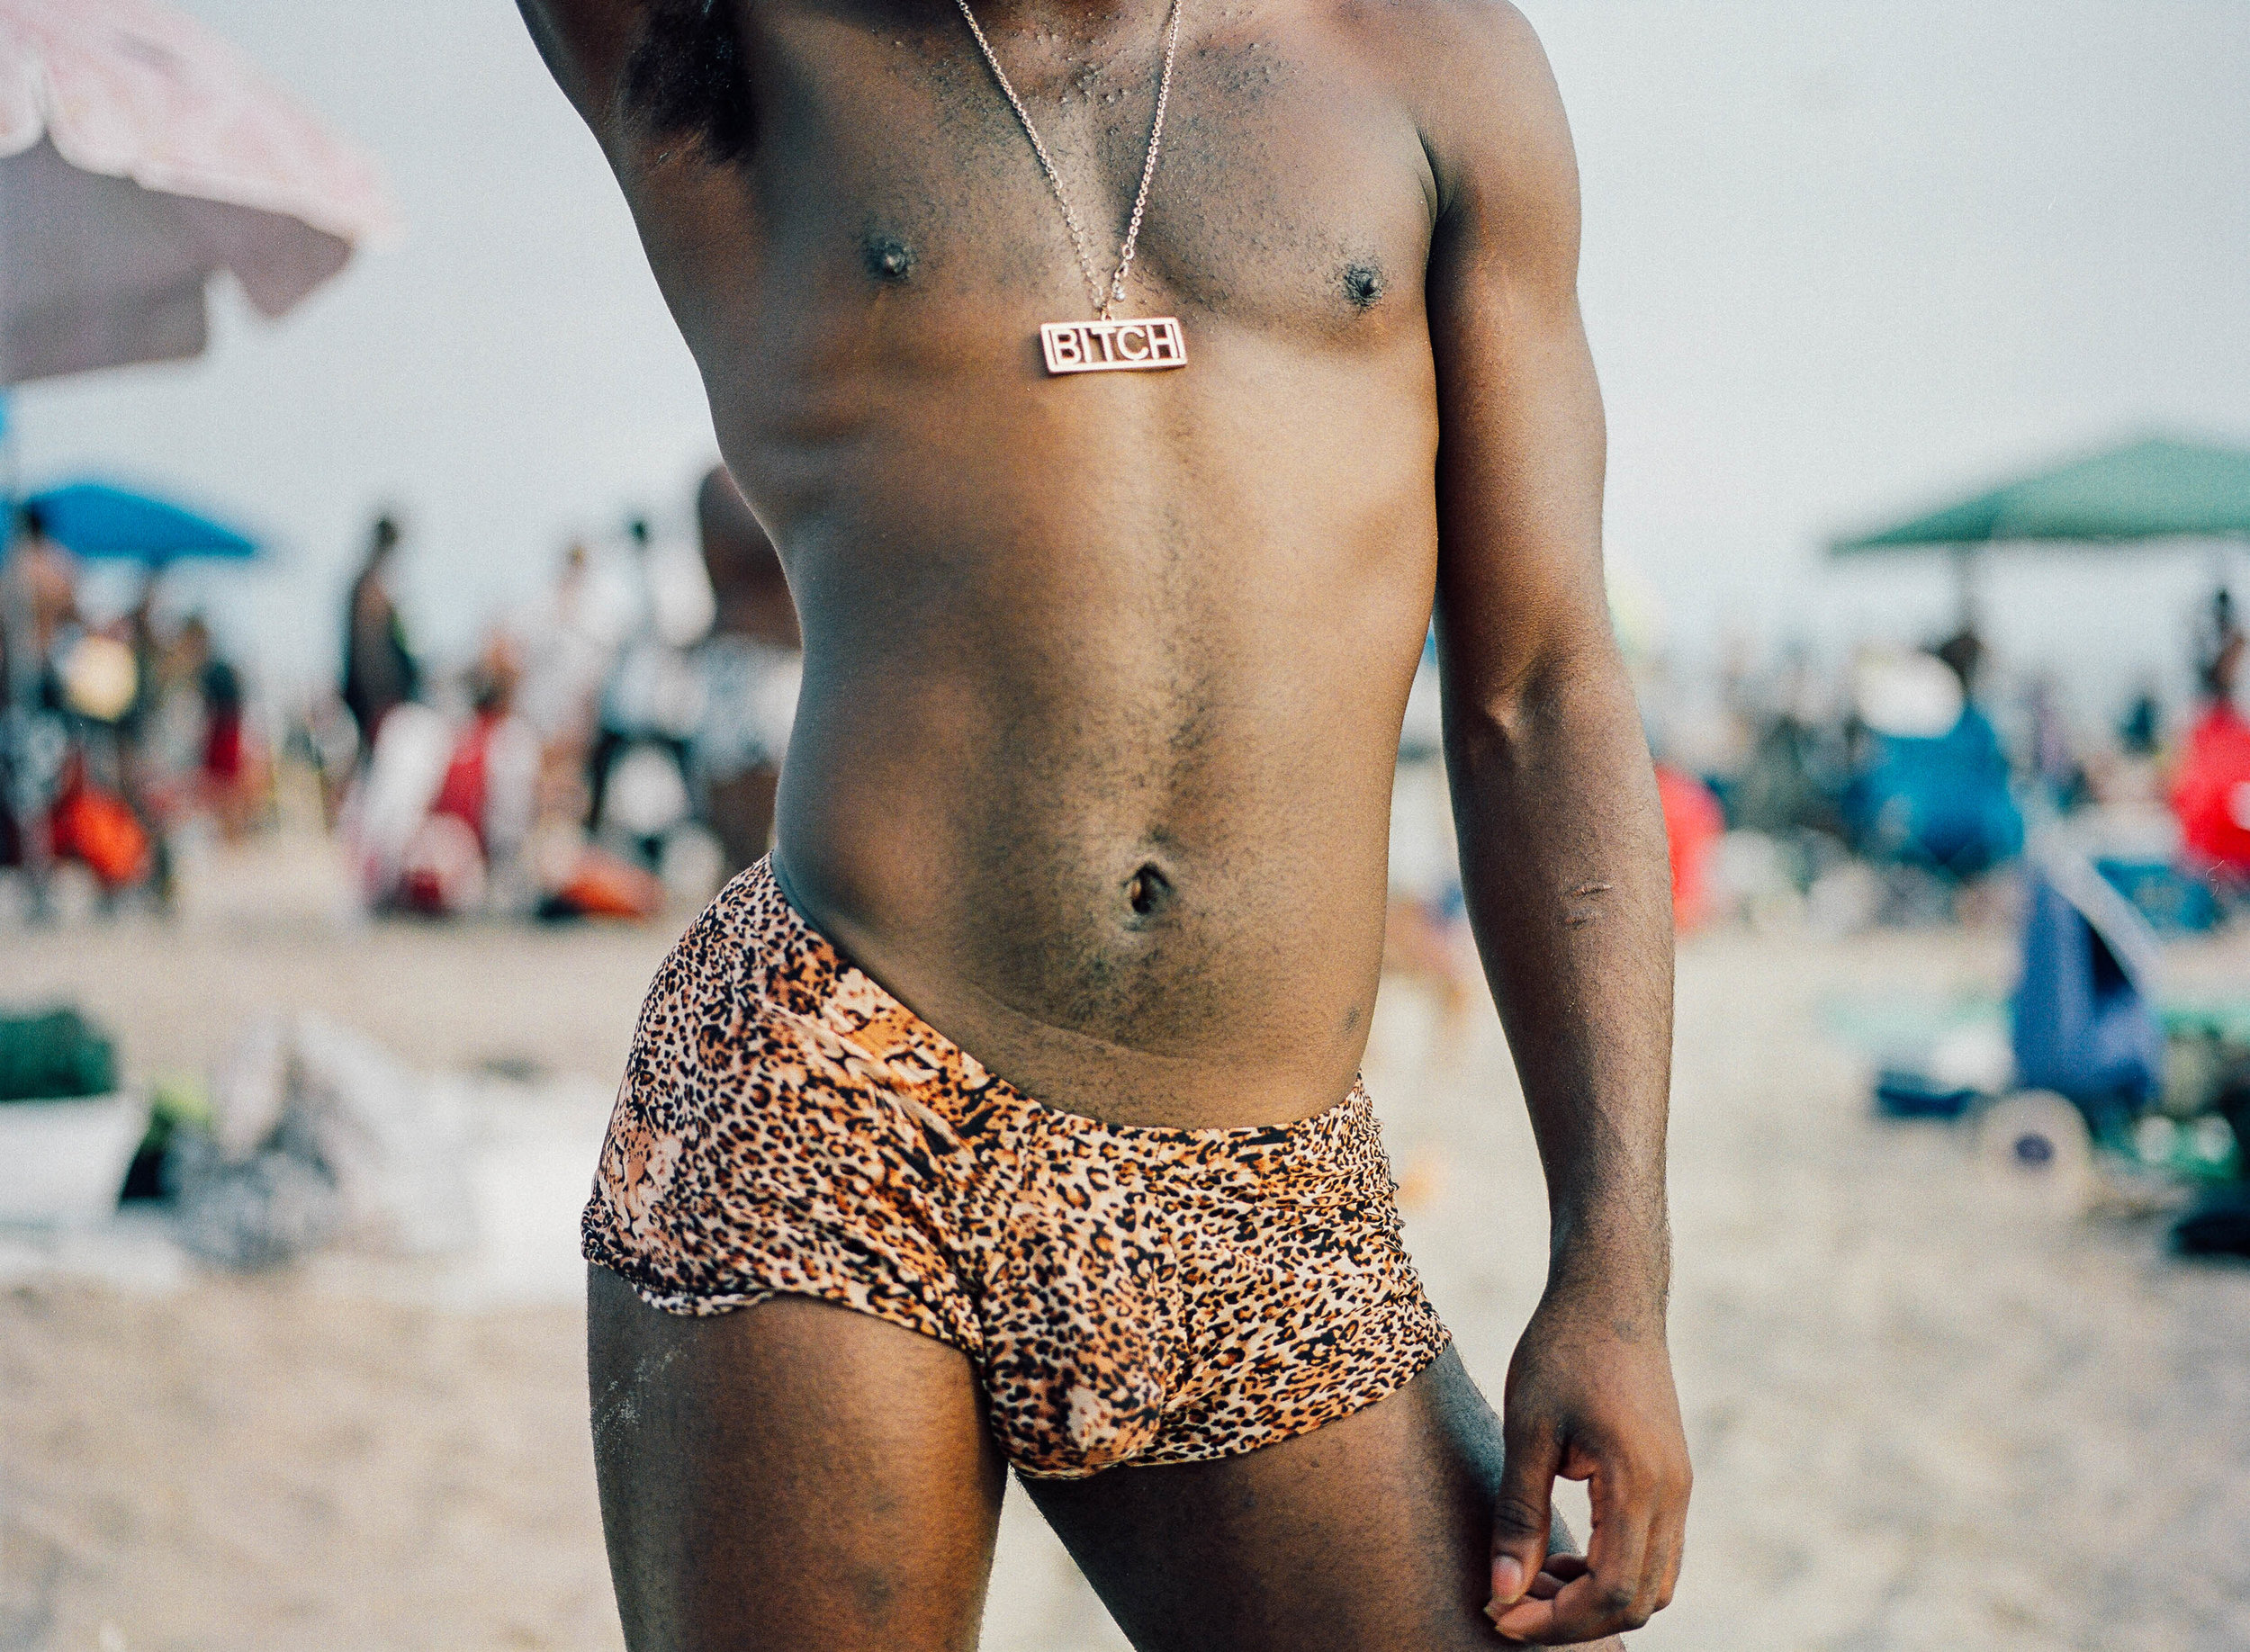   Man poses during Black Gay Pride celebration at Jacob Riis Park.&nbsp;  